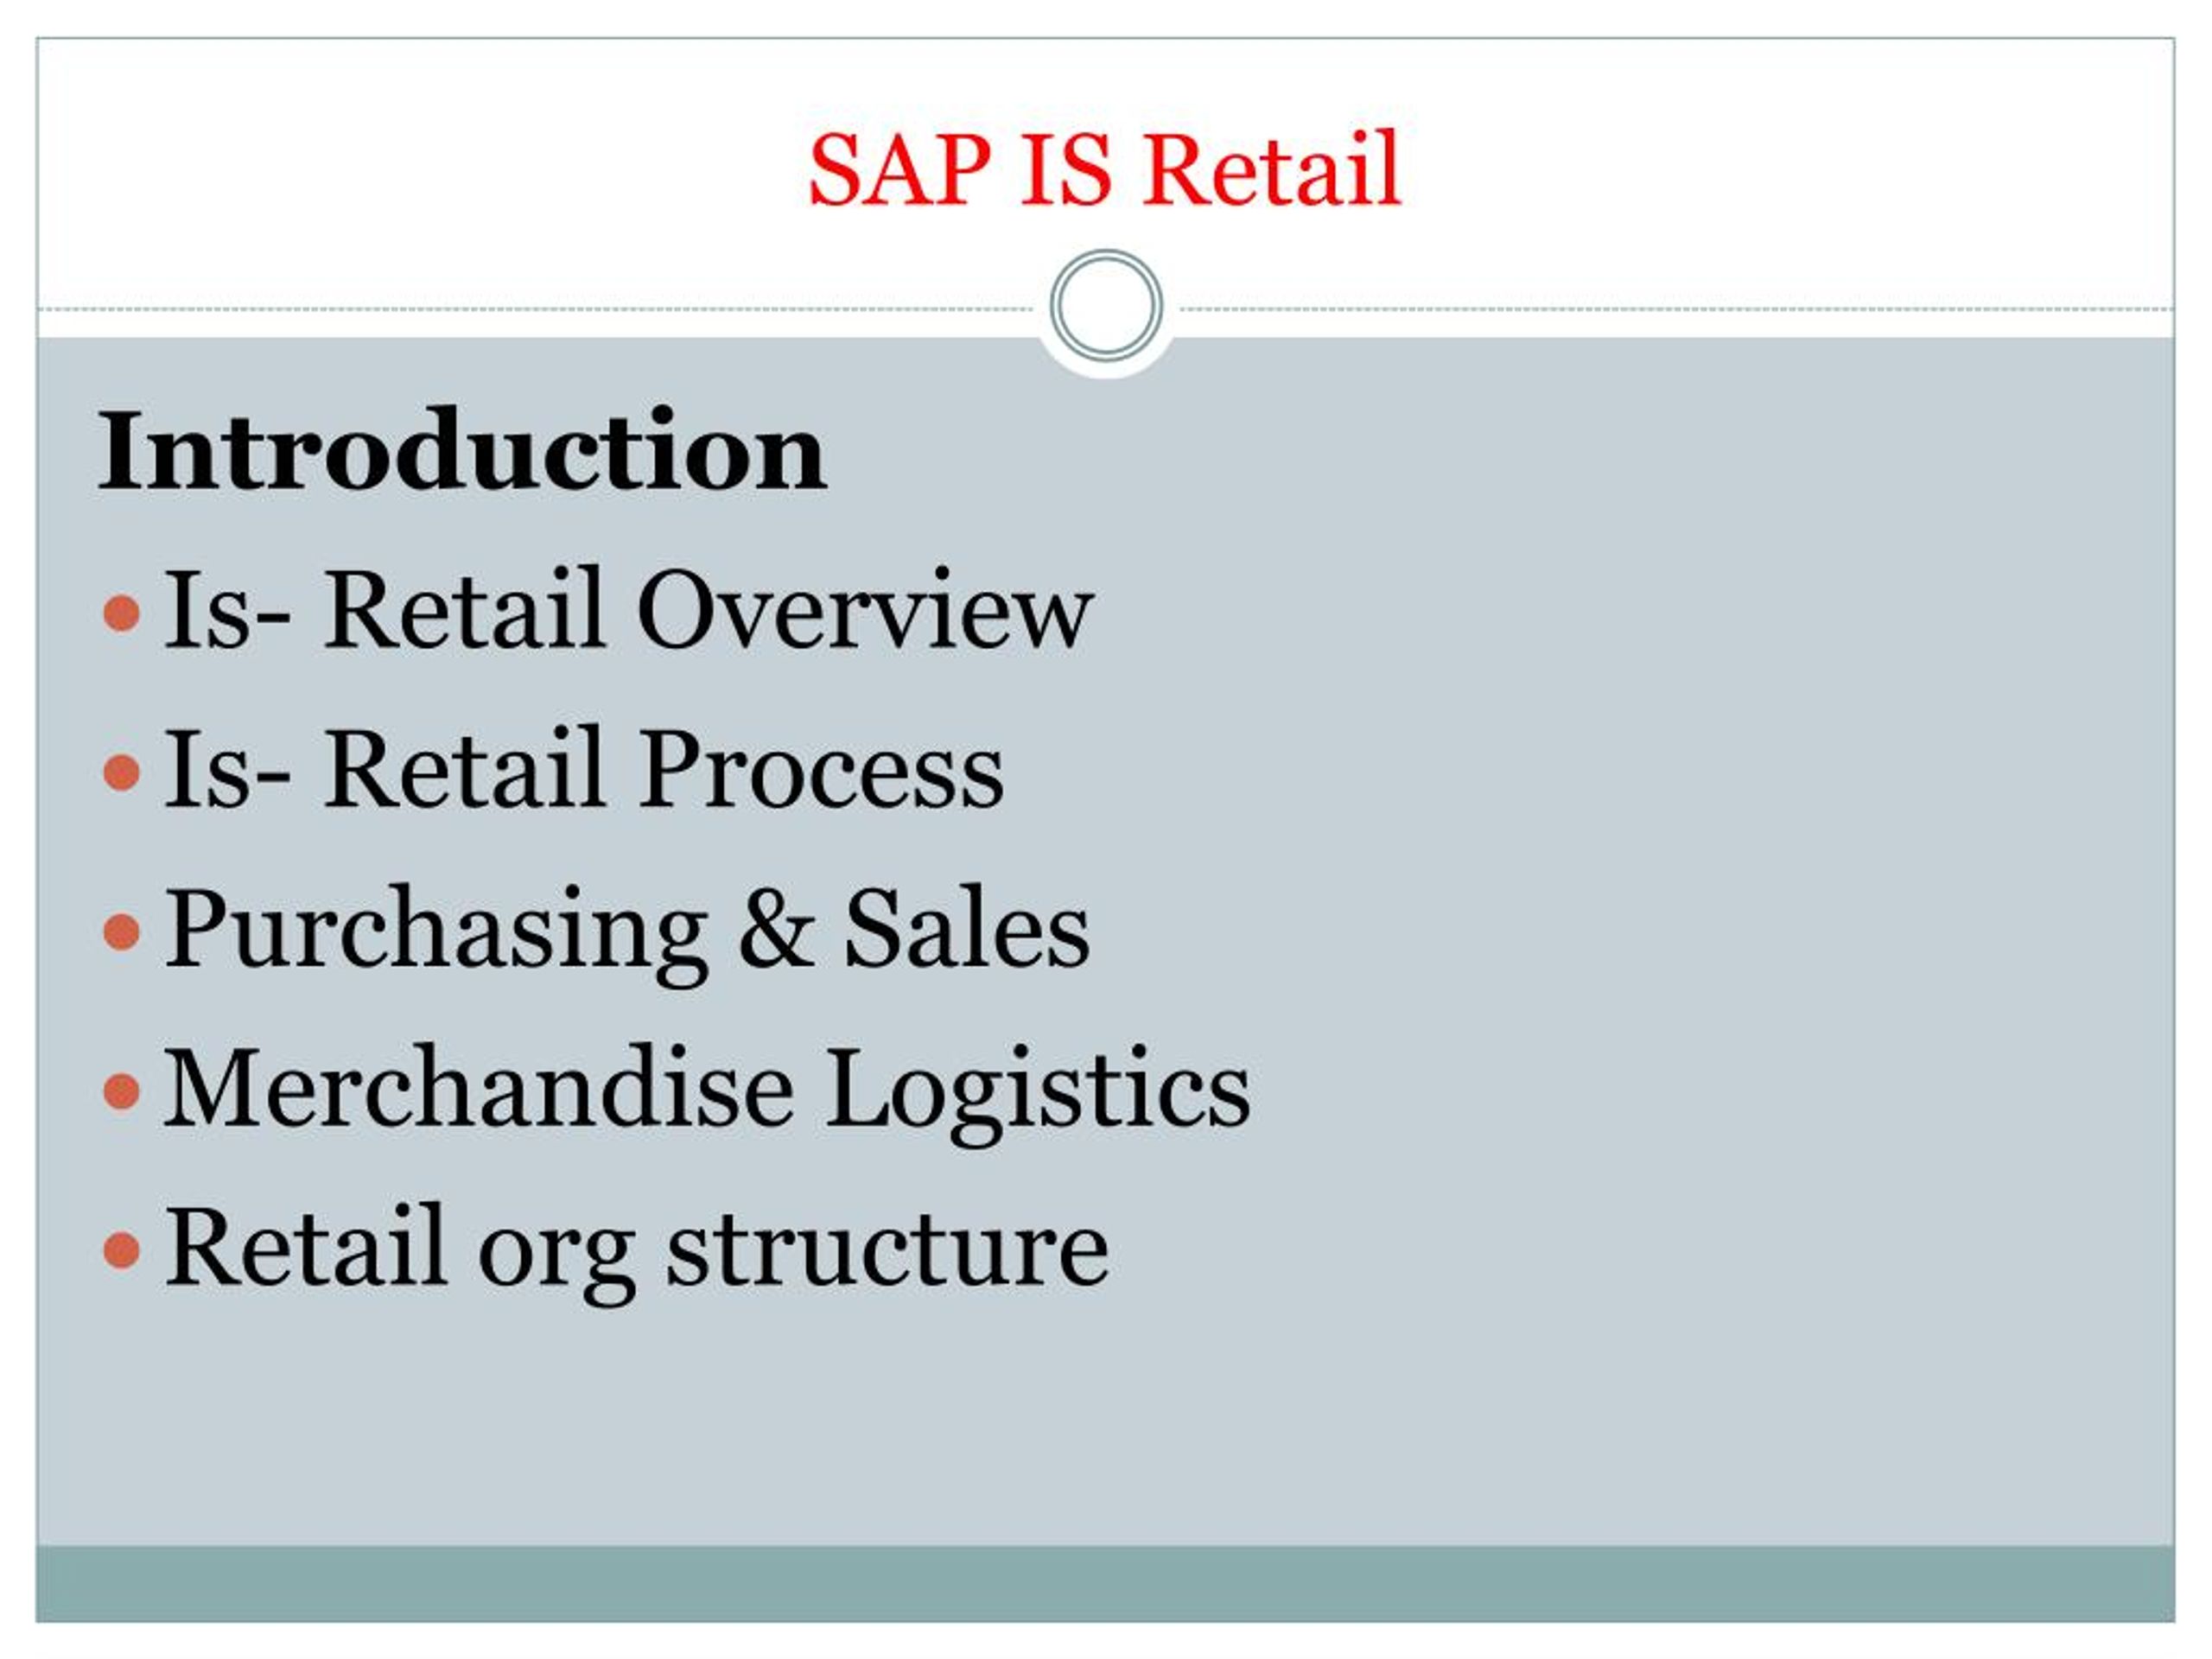 sap is retail tutorial